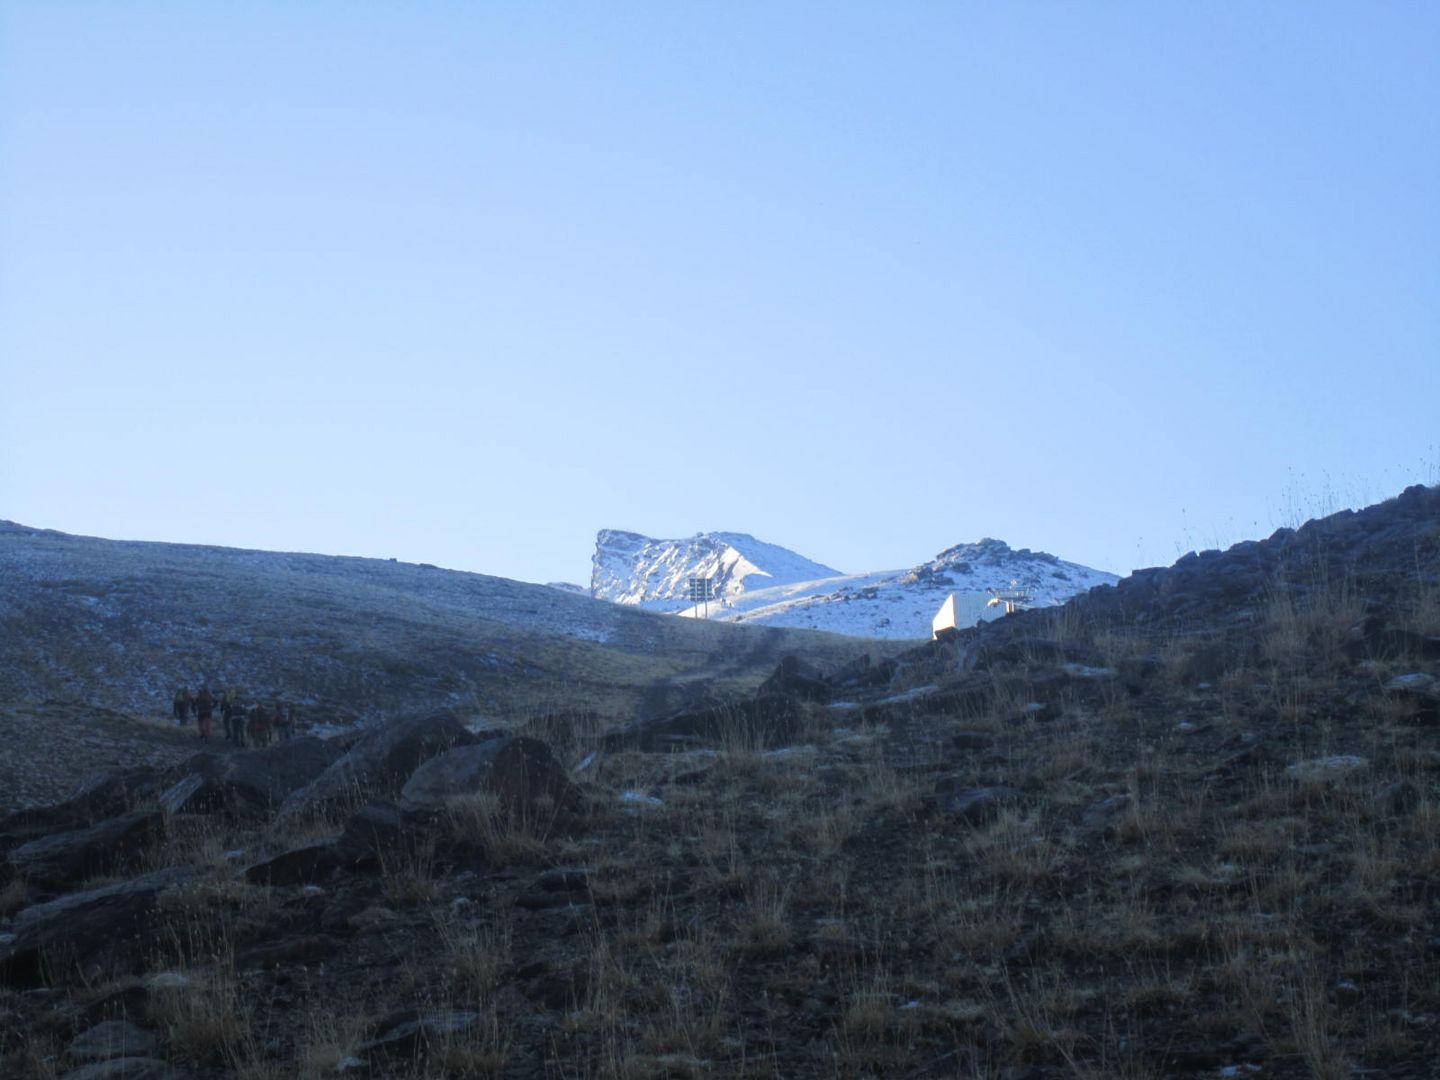 Sierra Nevada 28.11.2011